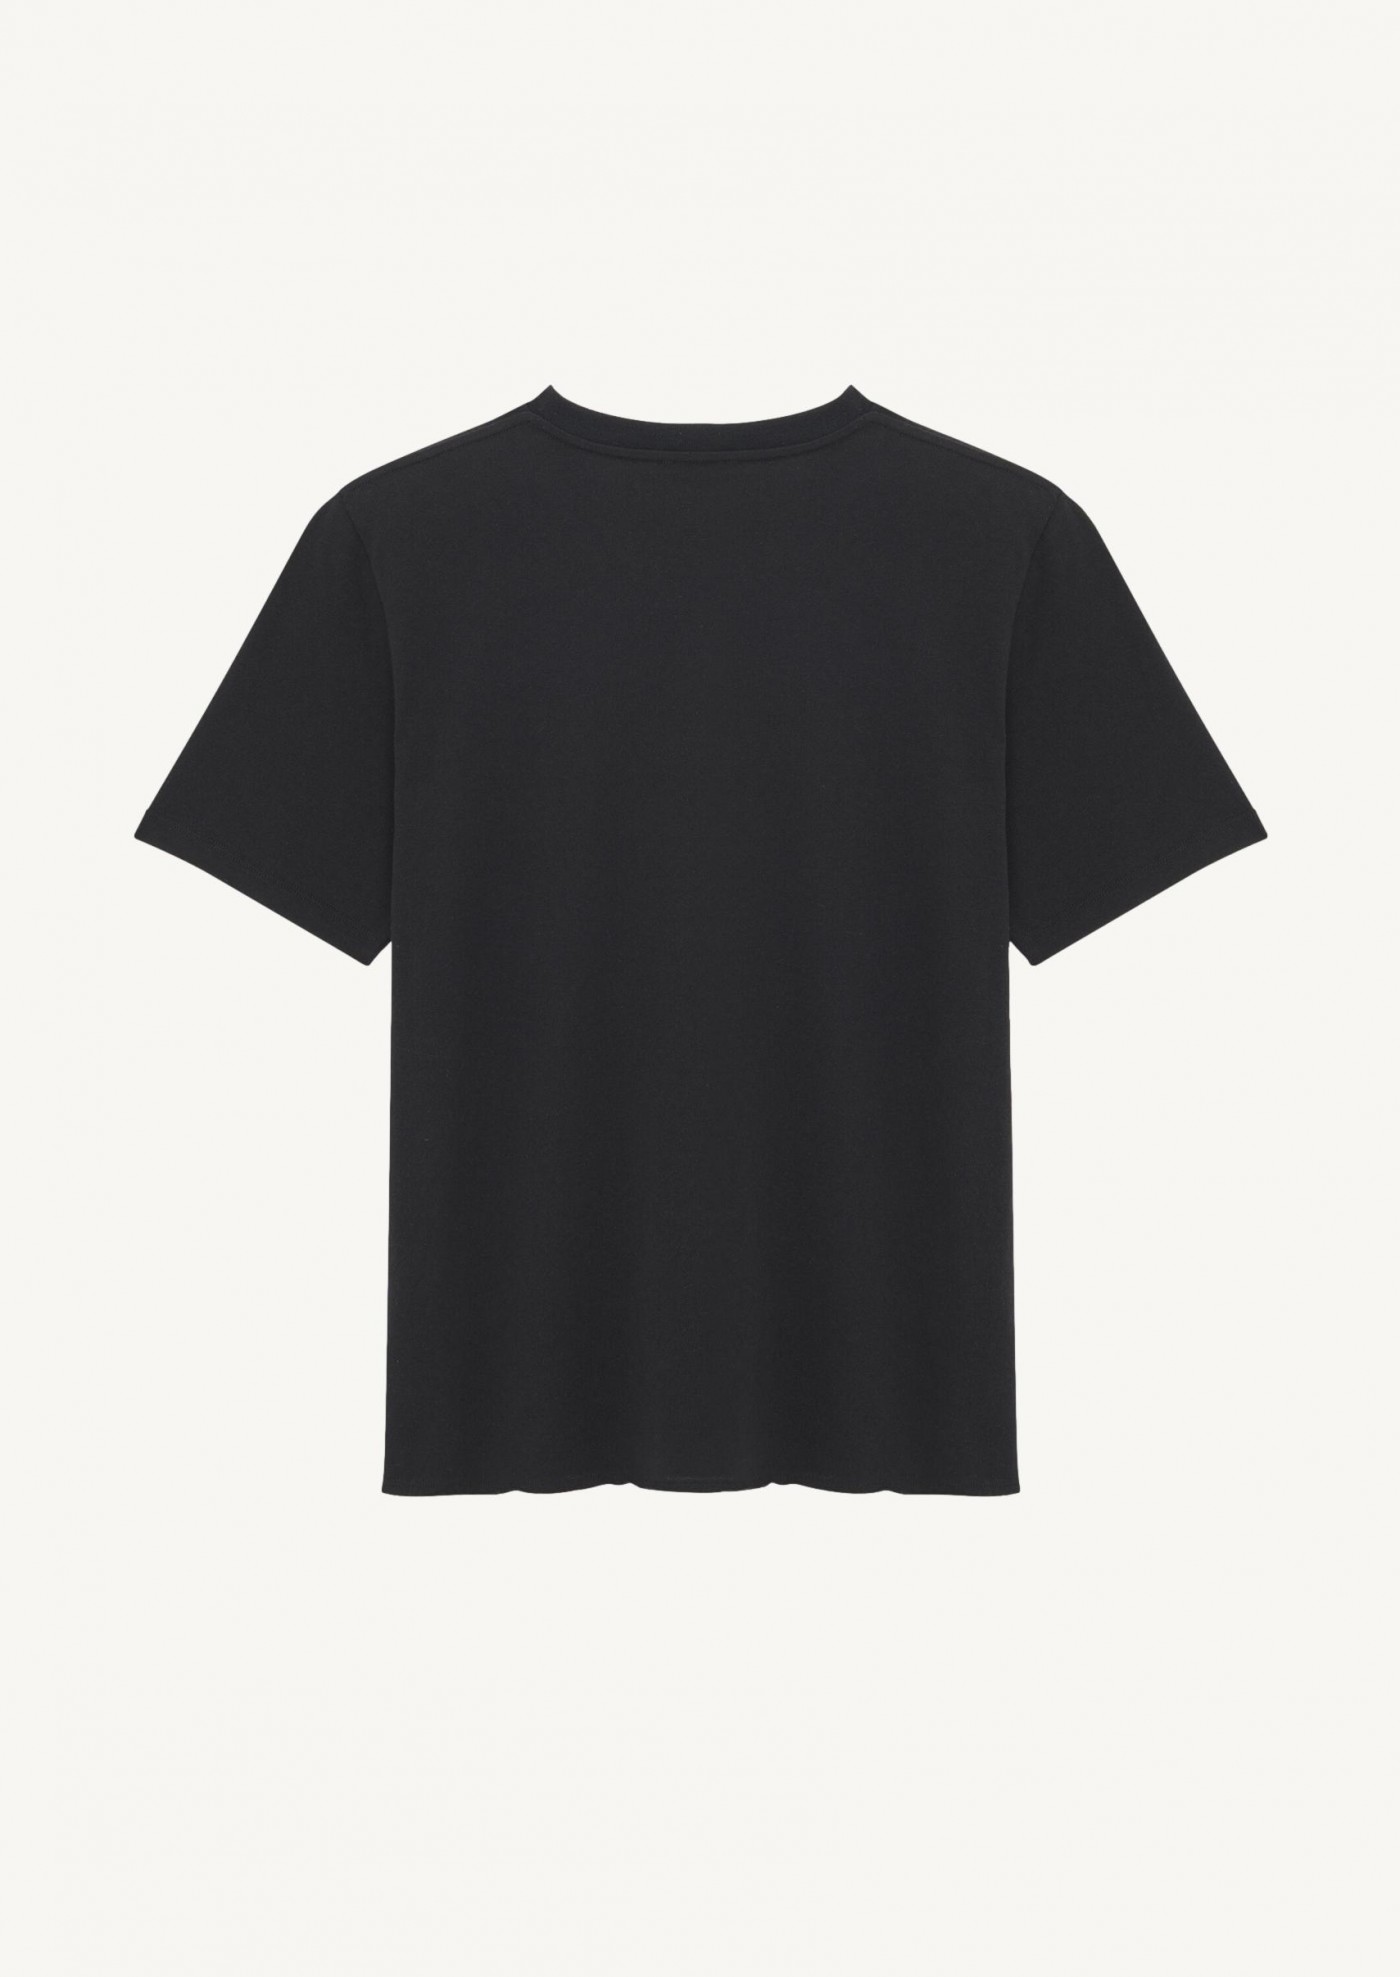 Saint Laurent black embroidered t-shirt